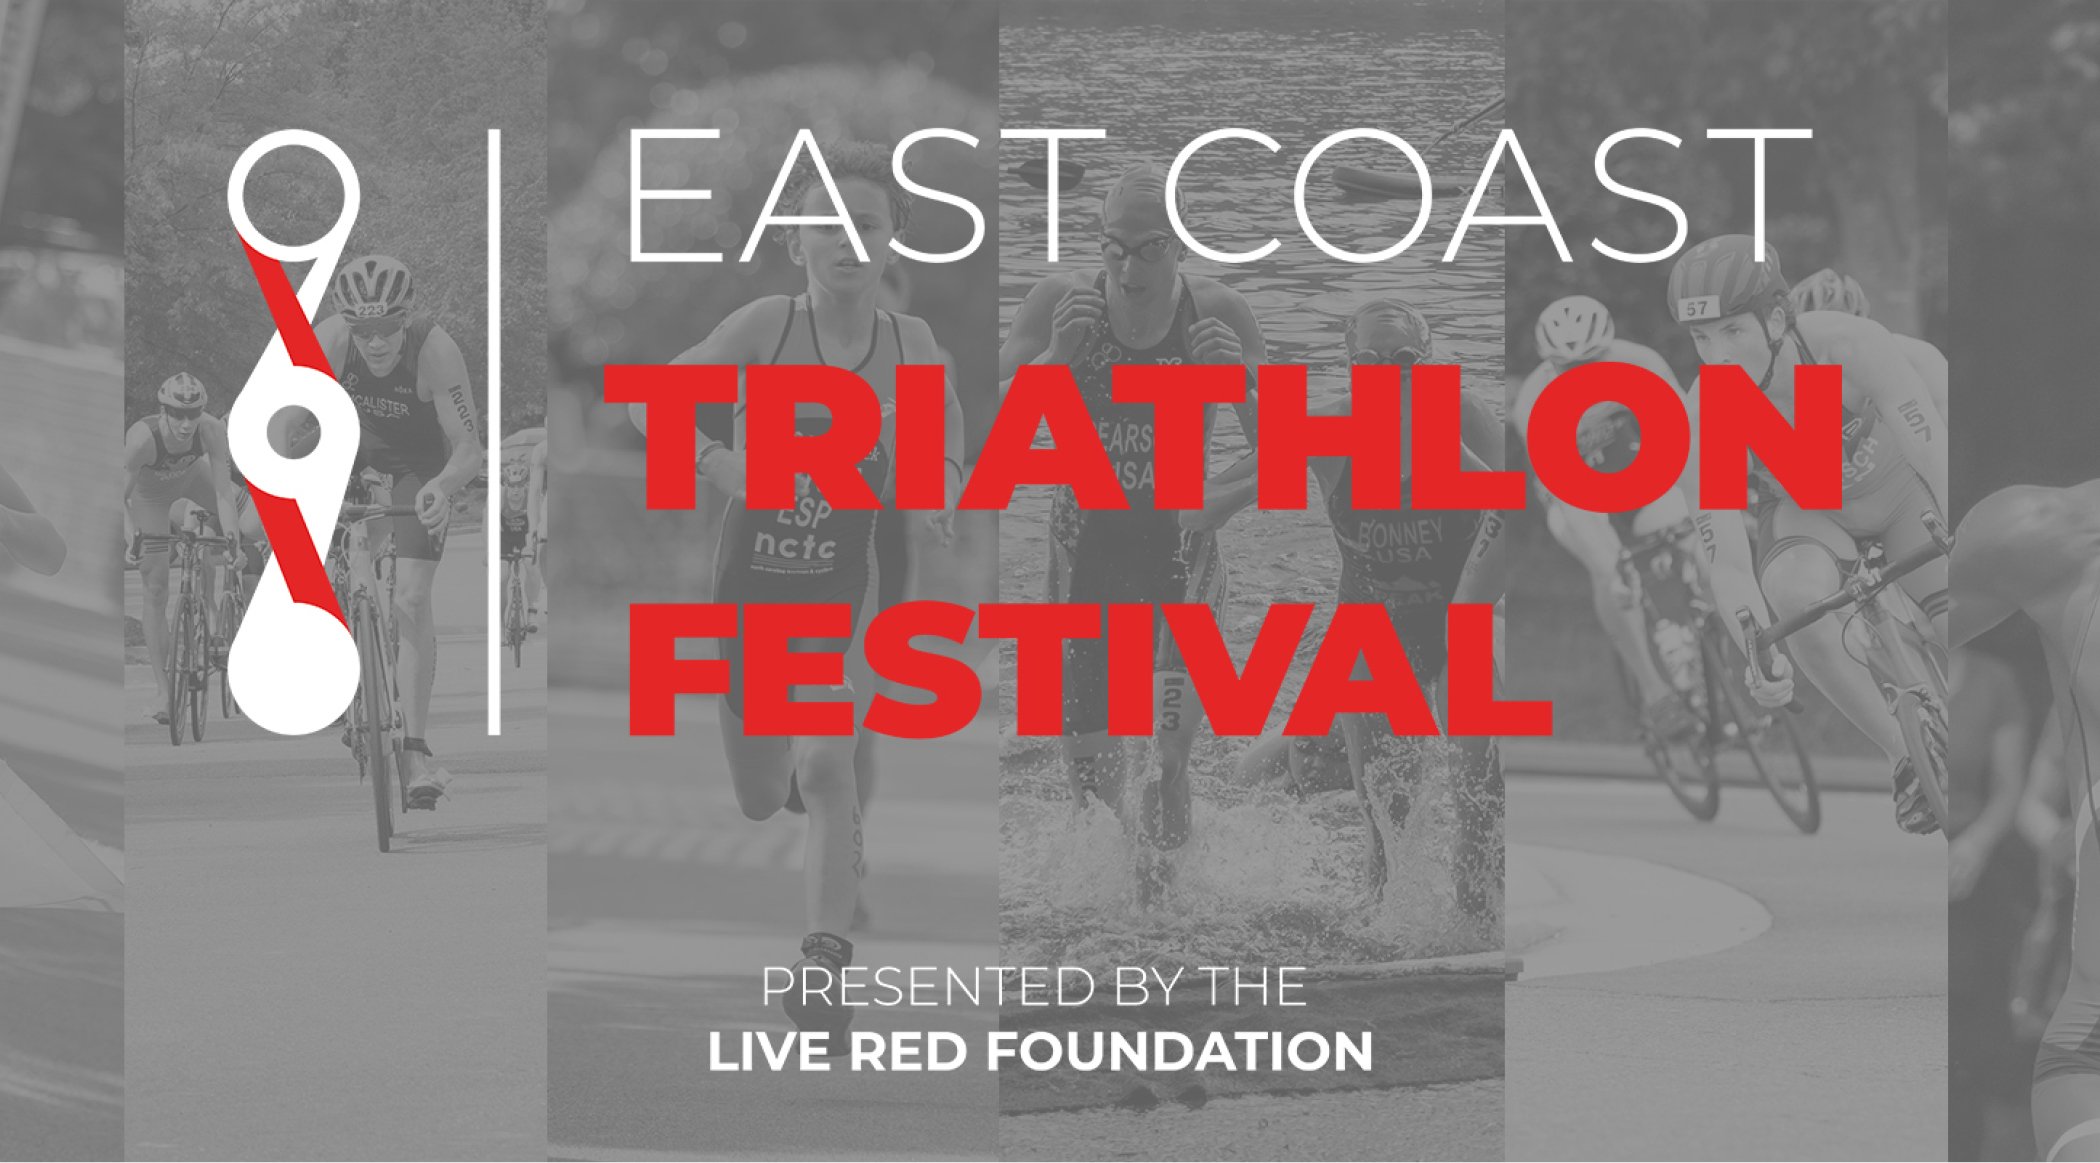 LiveRedFoundation East Coast Triathlon Festival